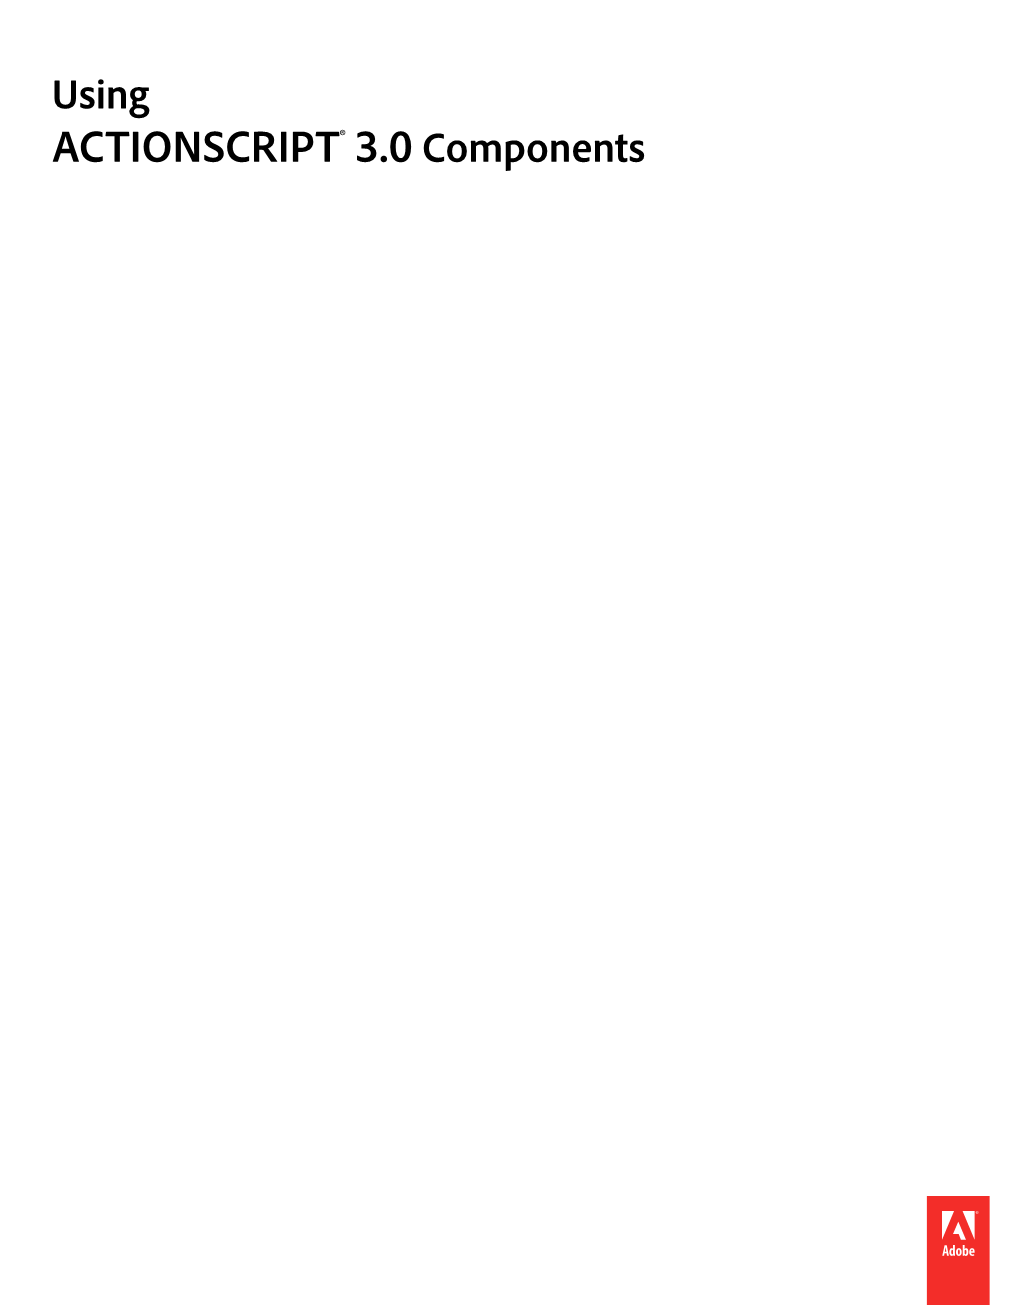 USING ACTIONSCRIPT 3.0 COMPONENTS Iv Contents